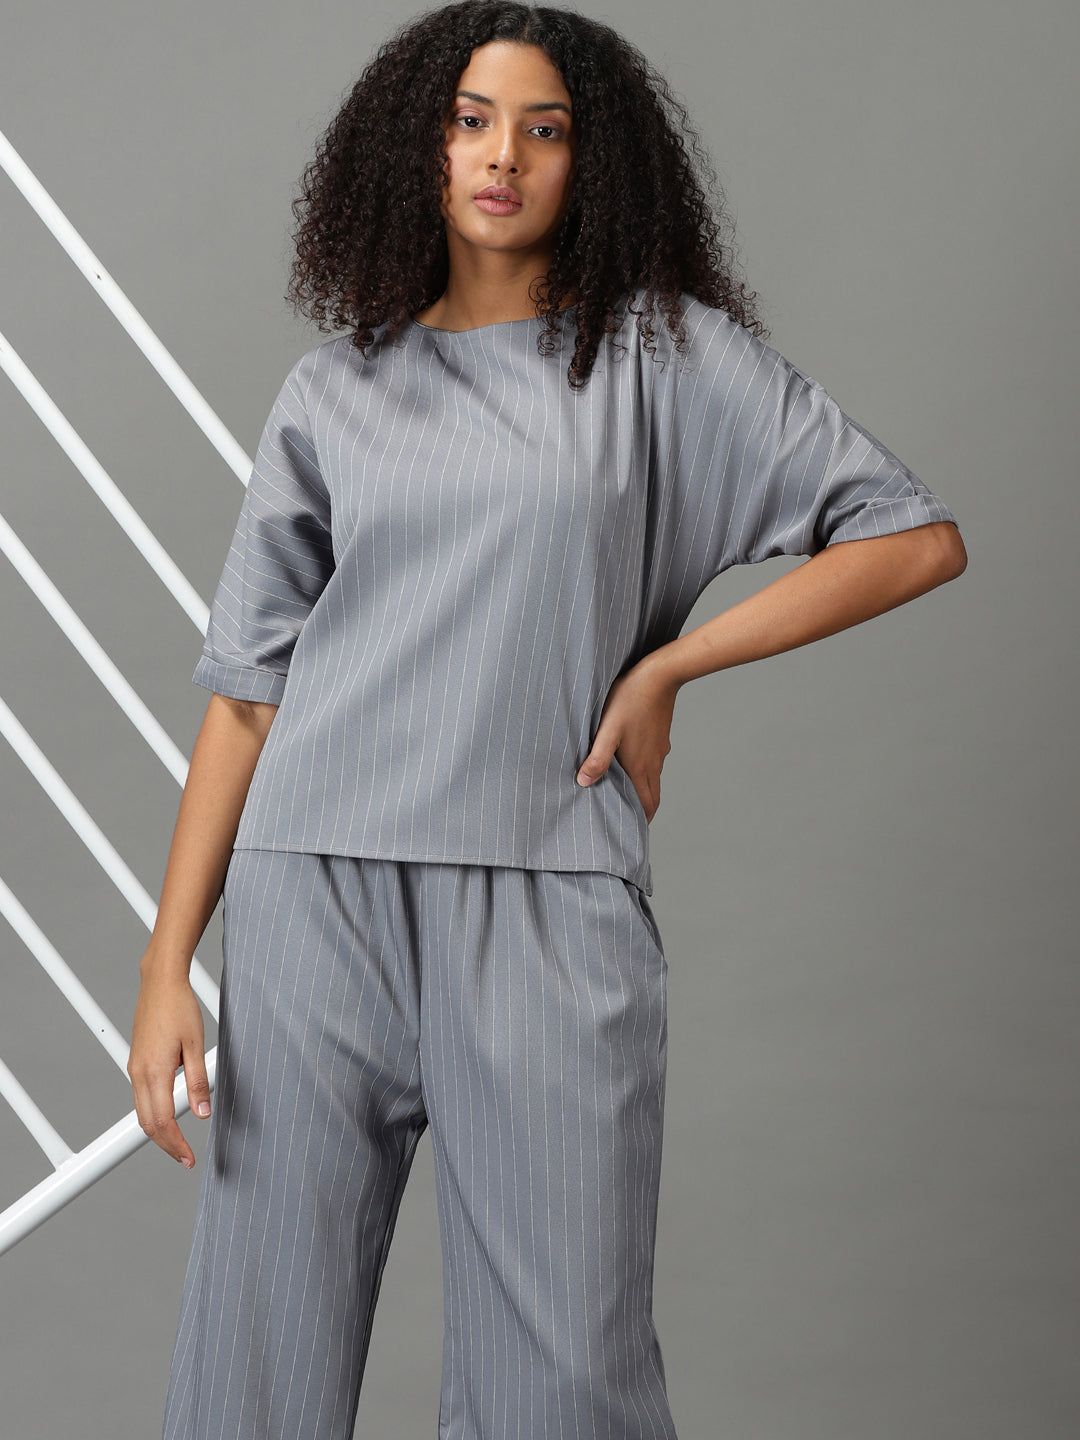 Women's Grey Striped Co-Ords